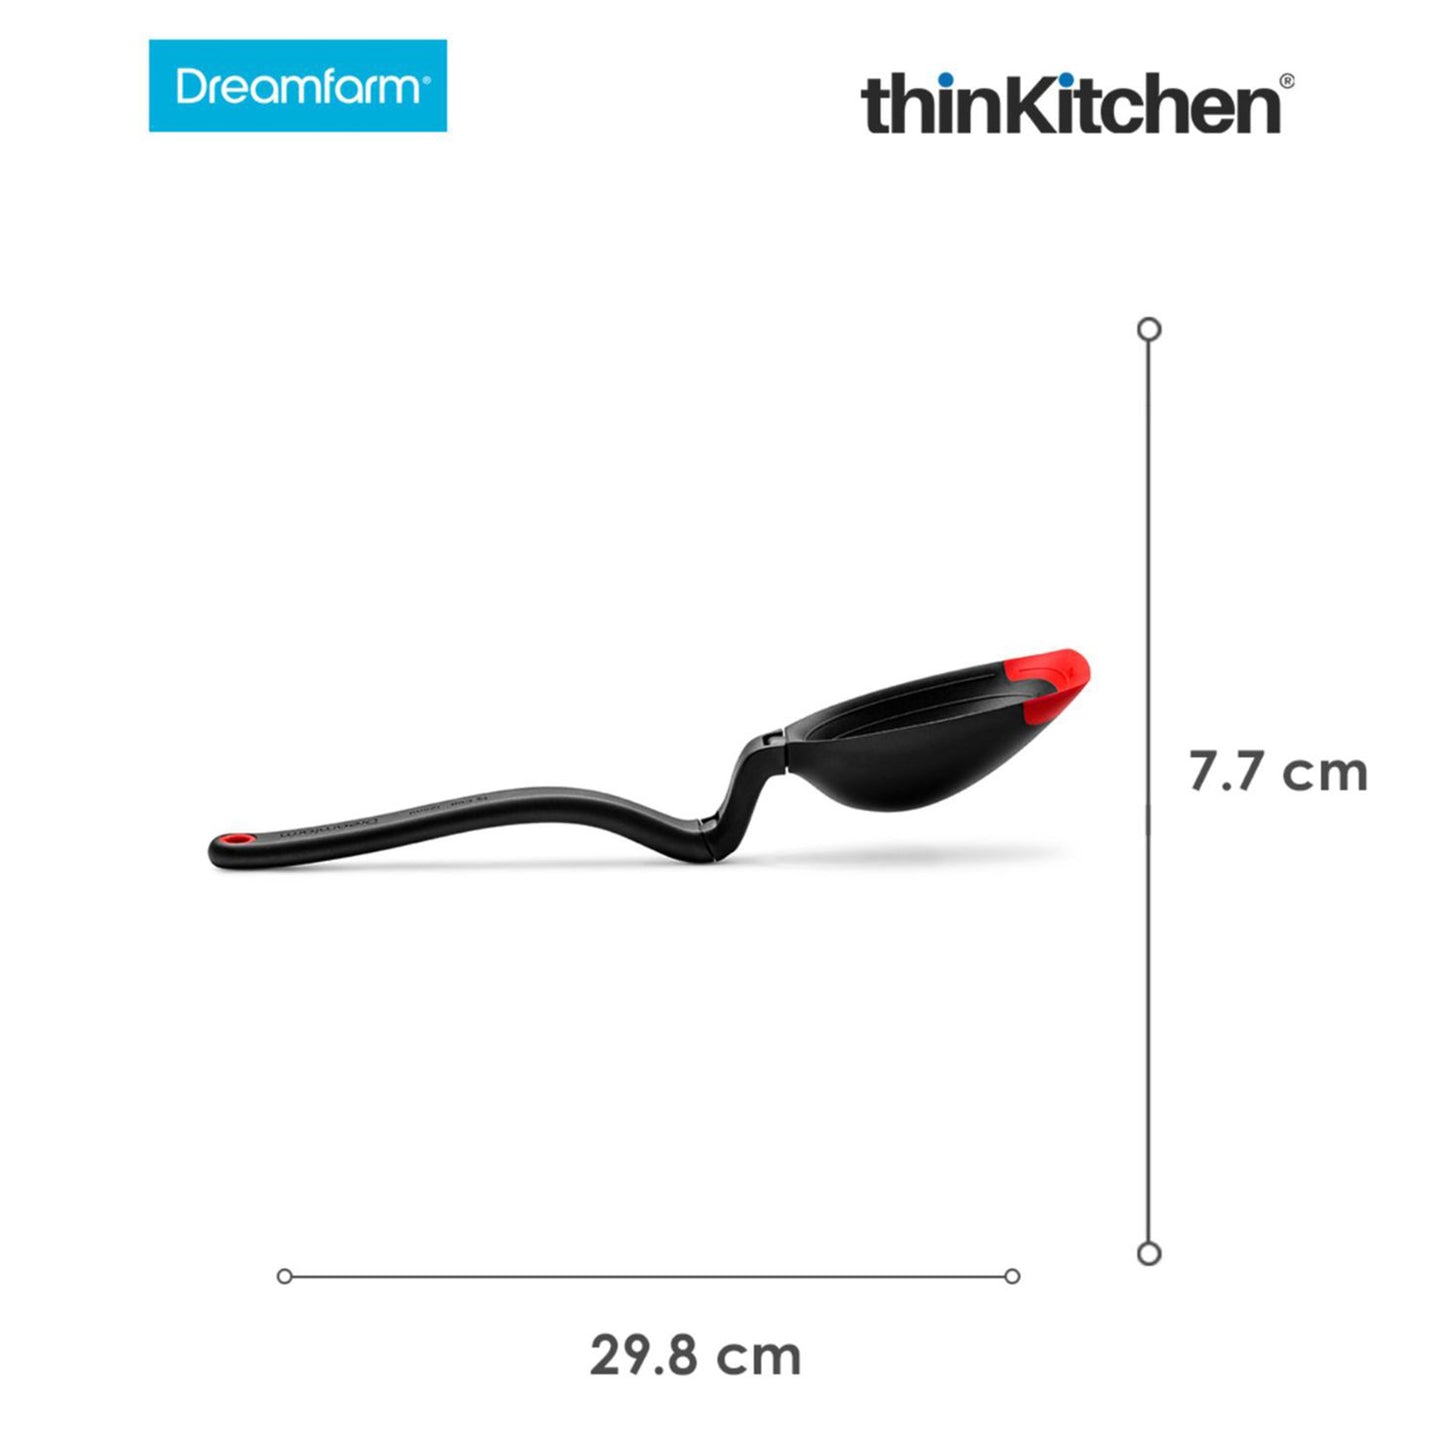 Dreamfarm Spadle Non Stick Cooking Spoon Serving Ladle With Measurements Red